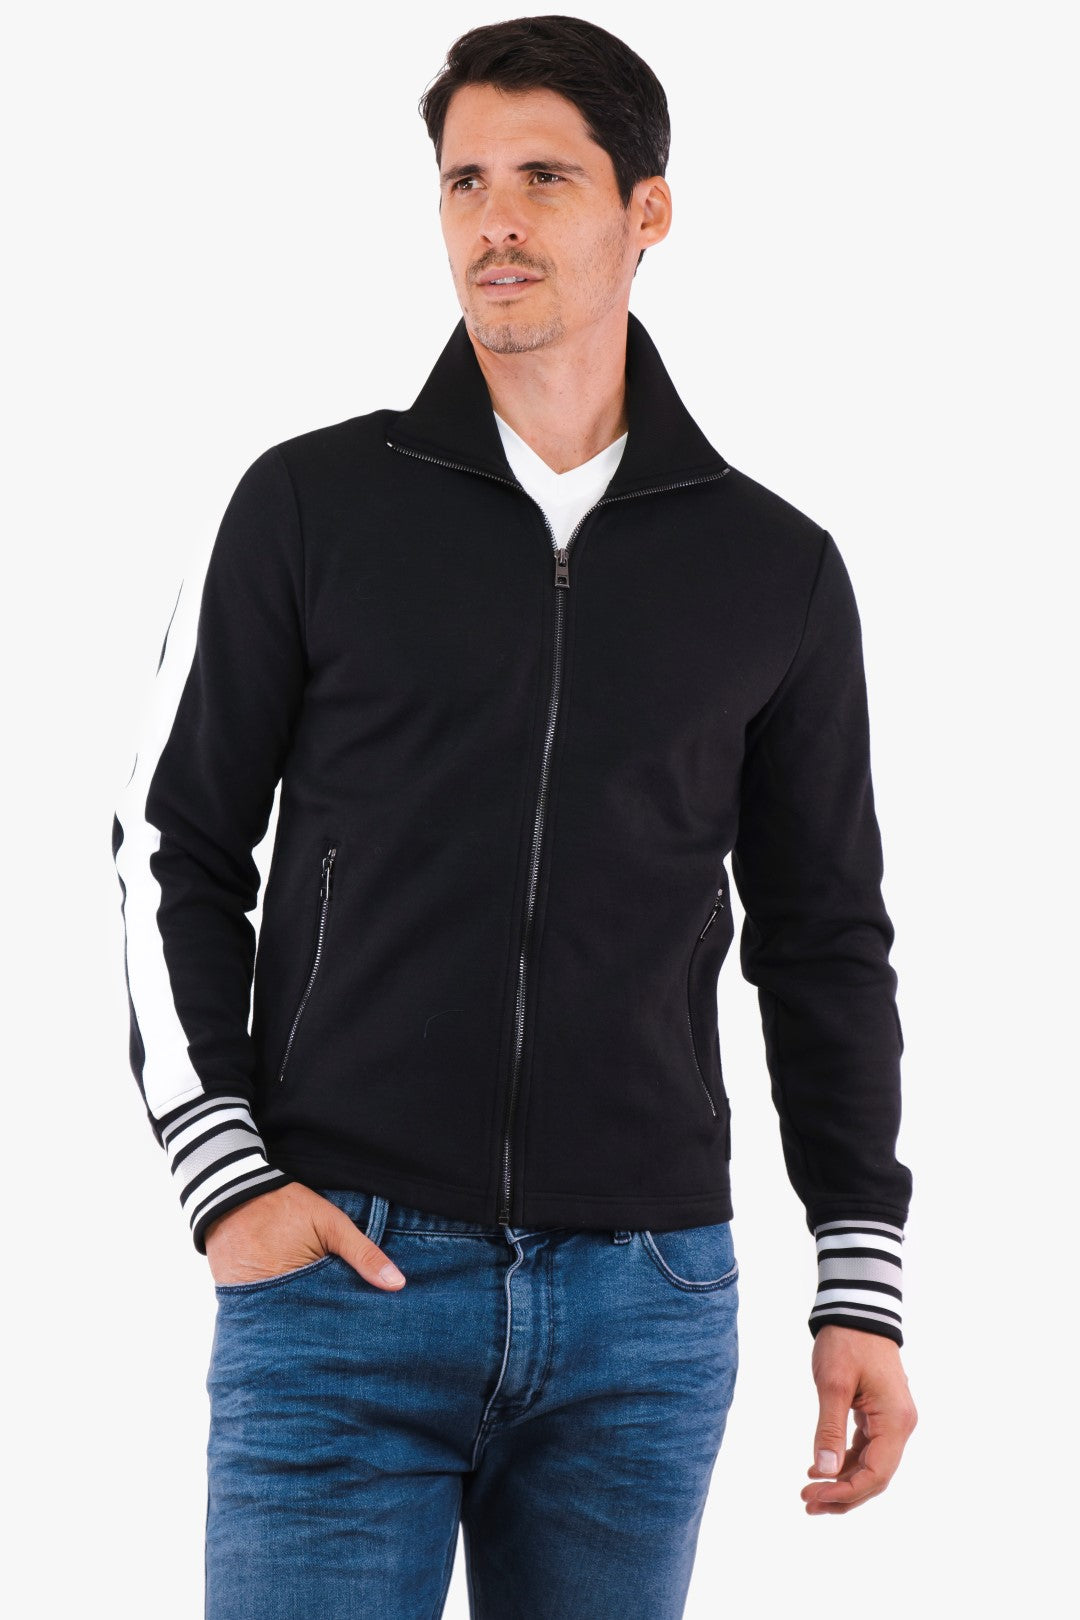 Boutique Option-Black Michael Kors Jacket (Kors-Cf2515R5Mf-001)